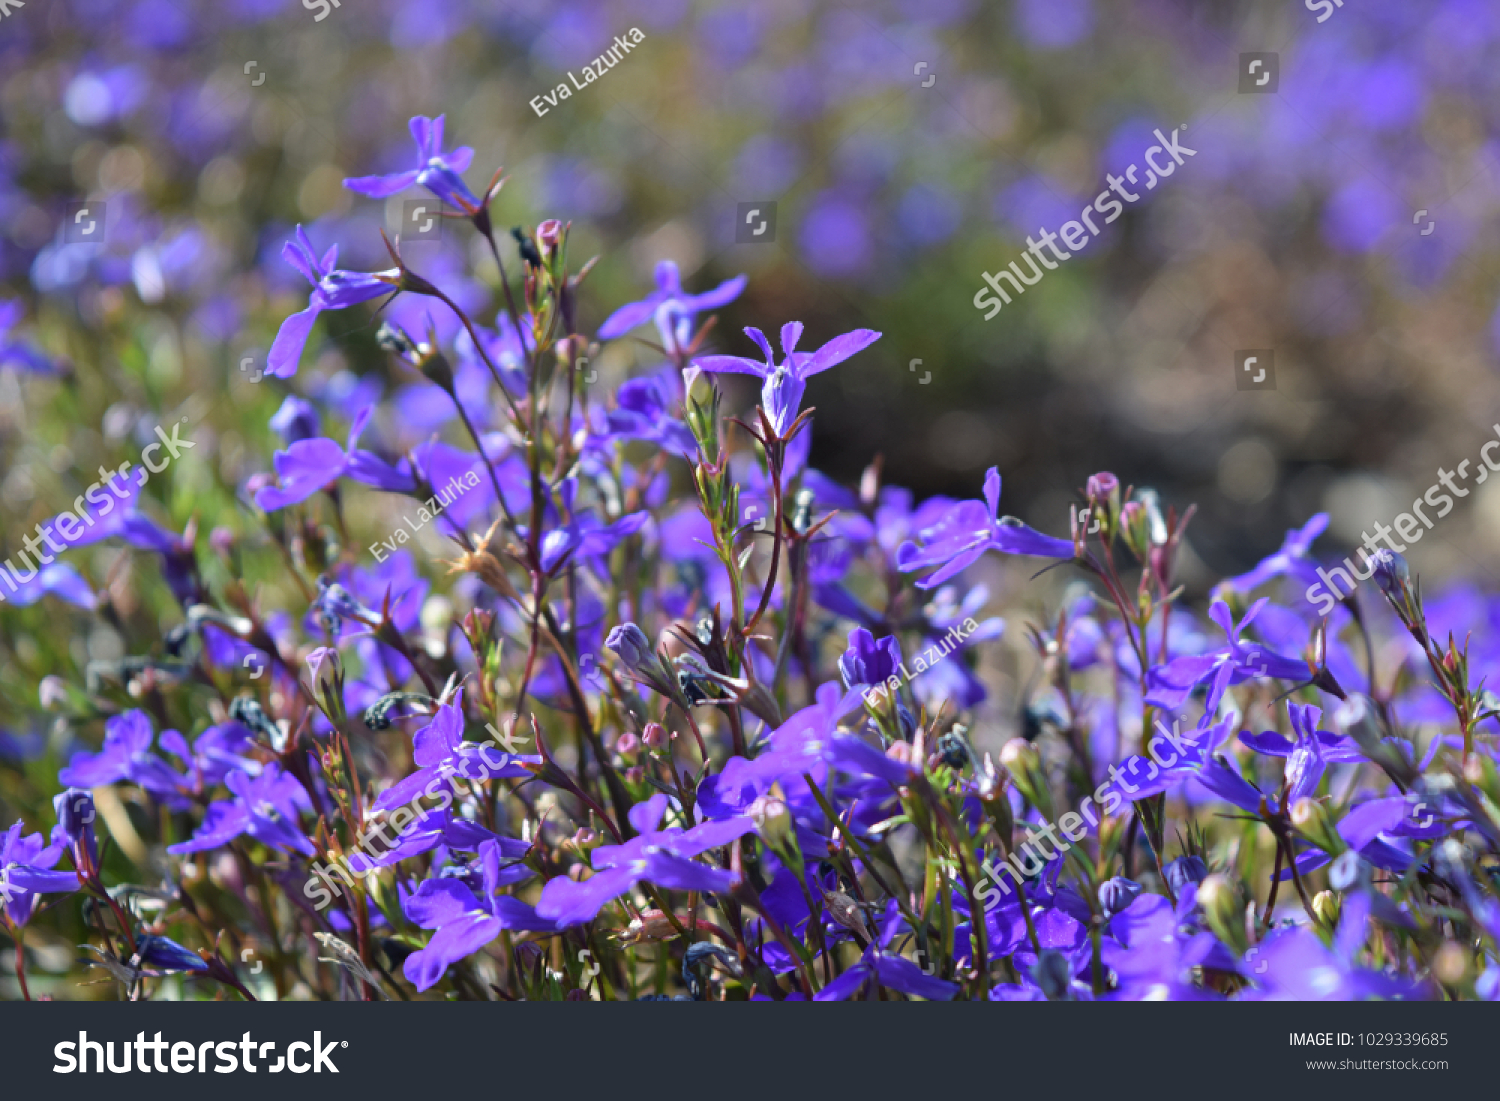 Close up lobelia blue flowers. Annuals. Natural look. #1029339685